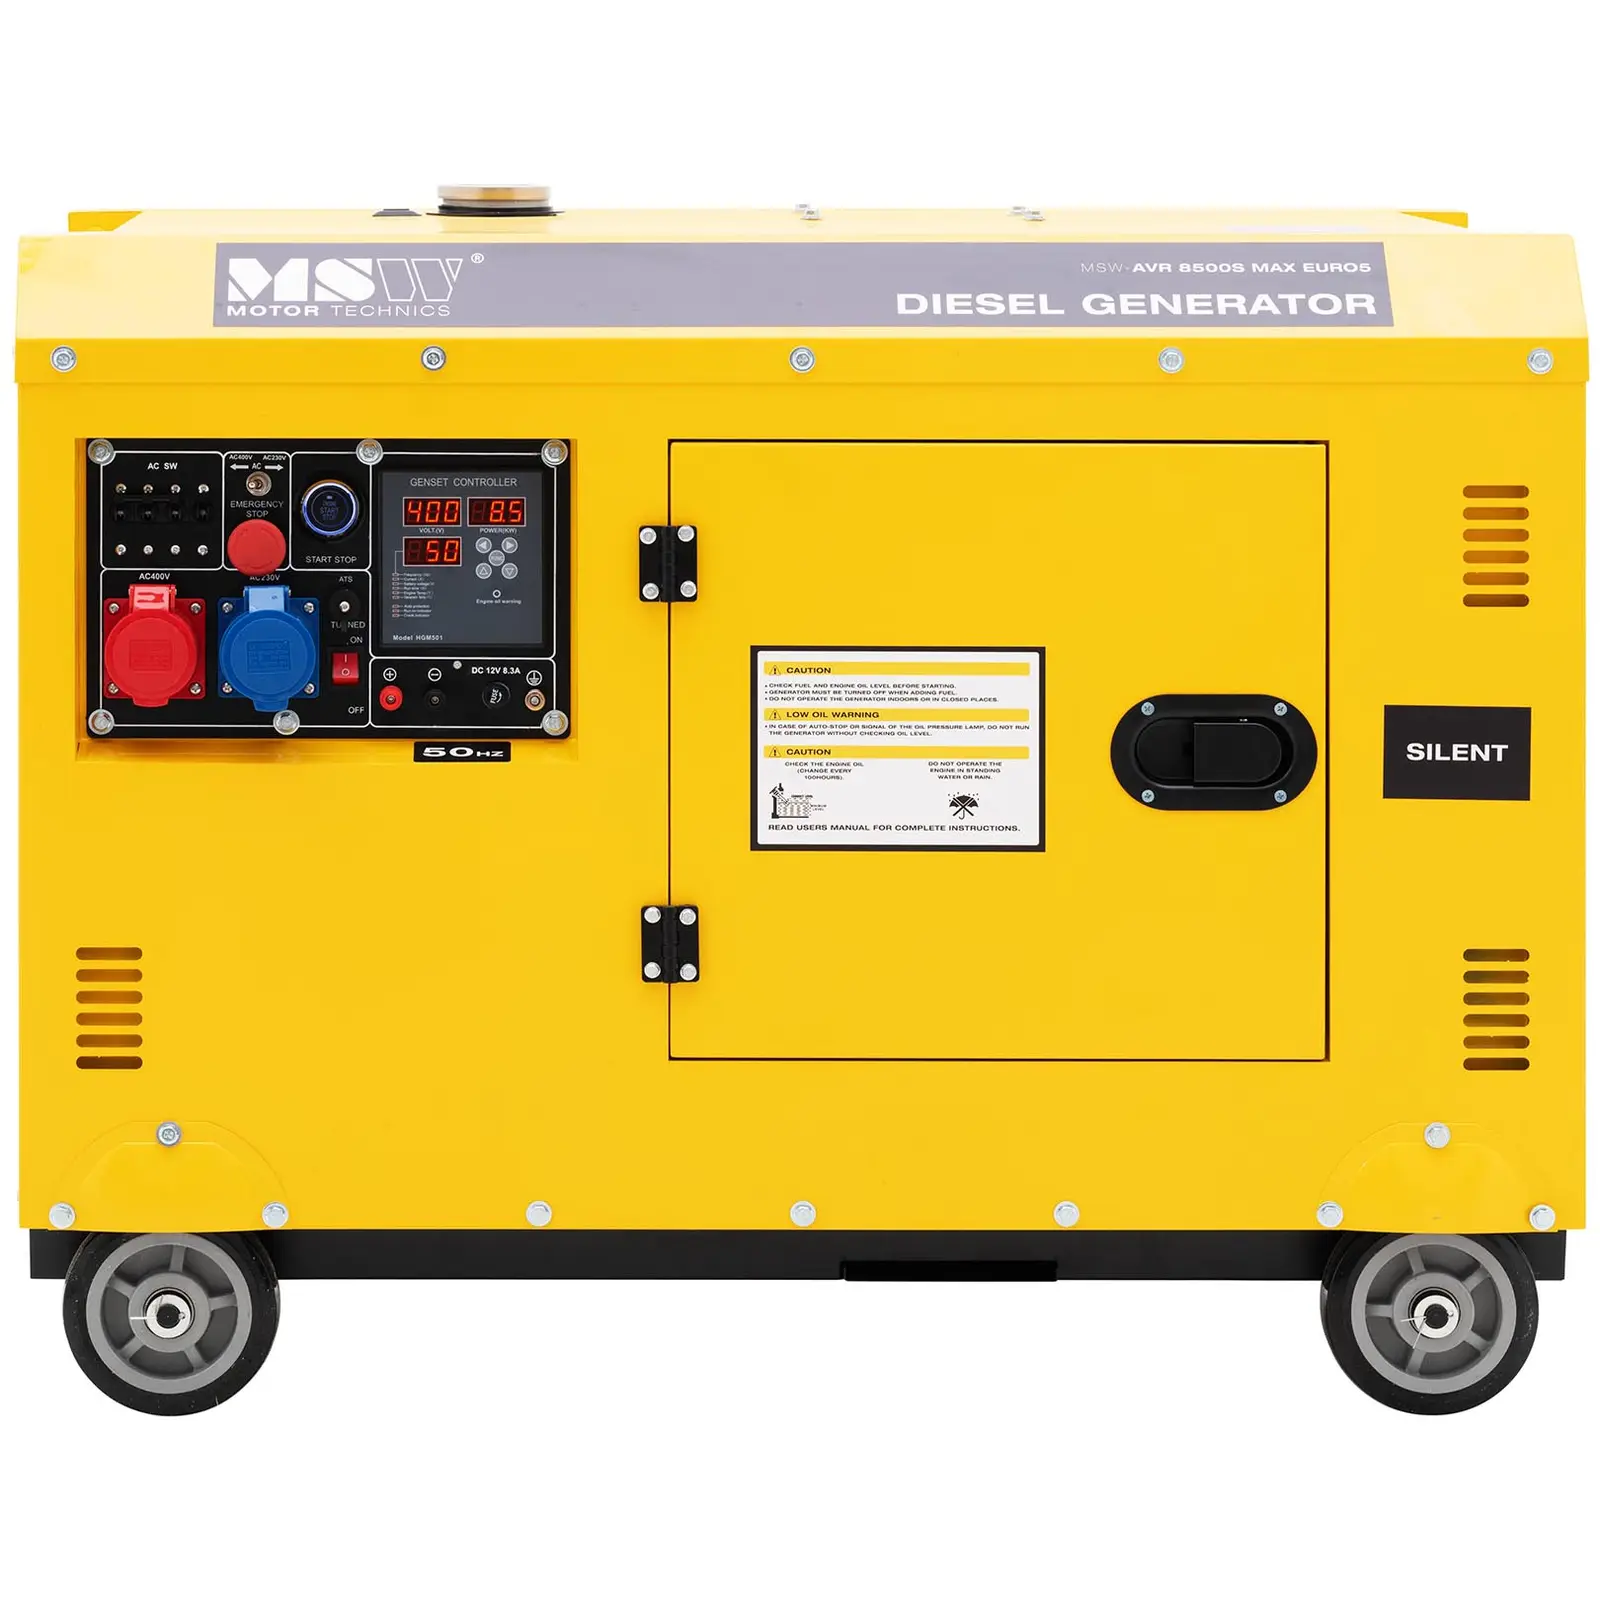 Notstromaggregat Diesel - 7220 / 8500 W - 30 L - 240/400 V - mobil - AVR - Euro 5